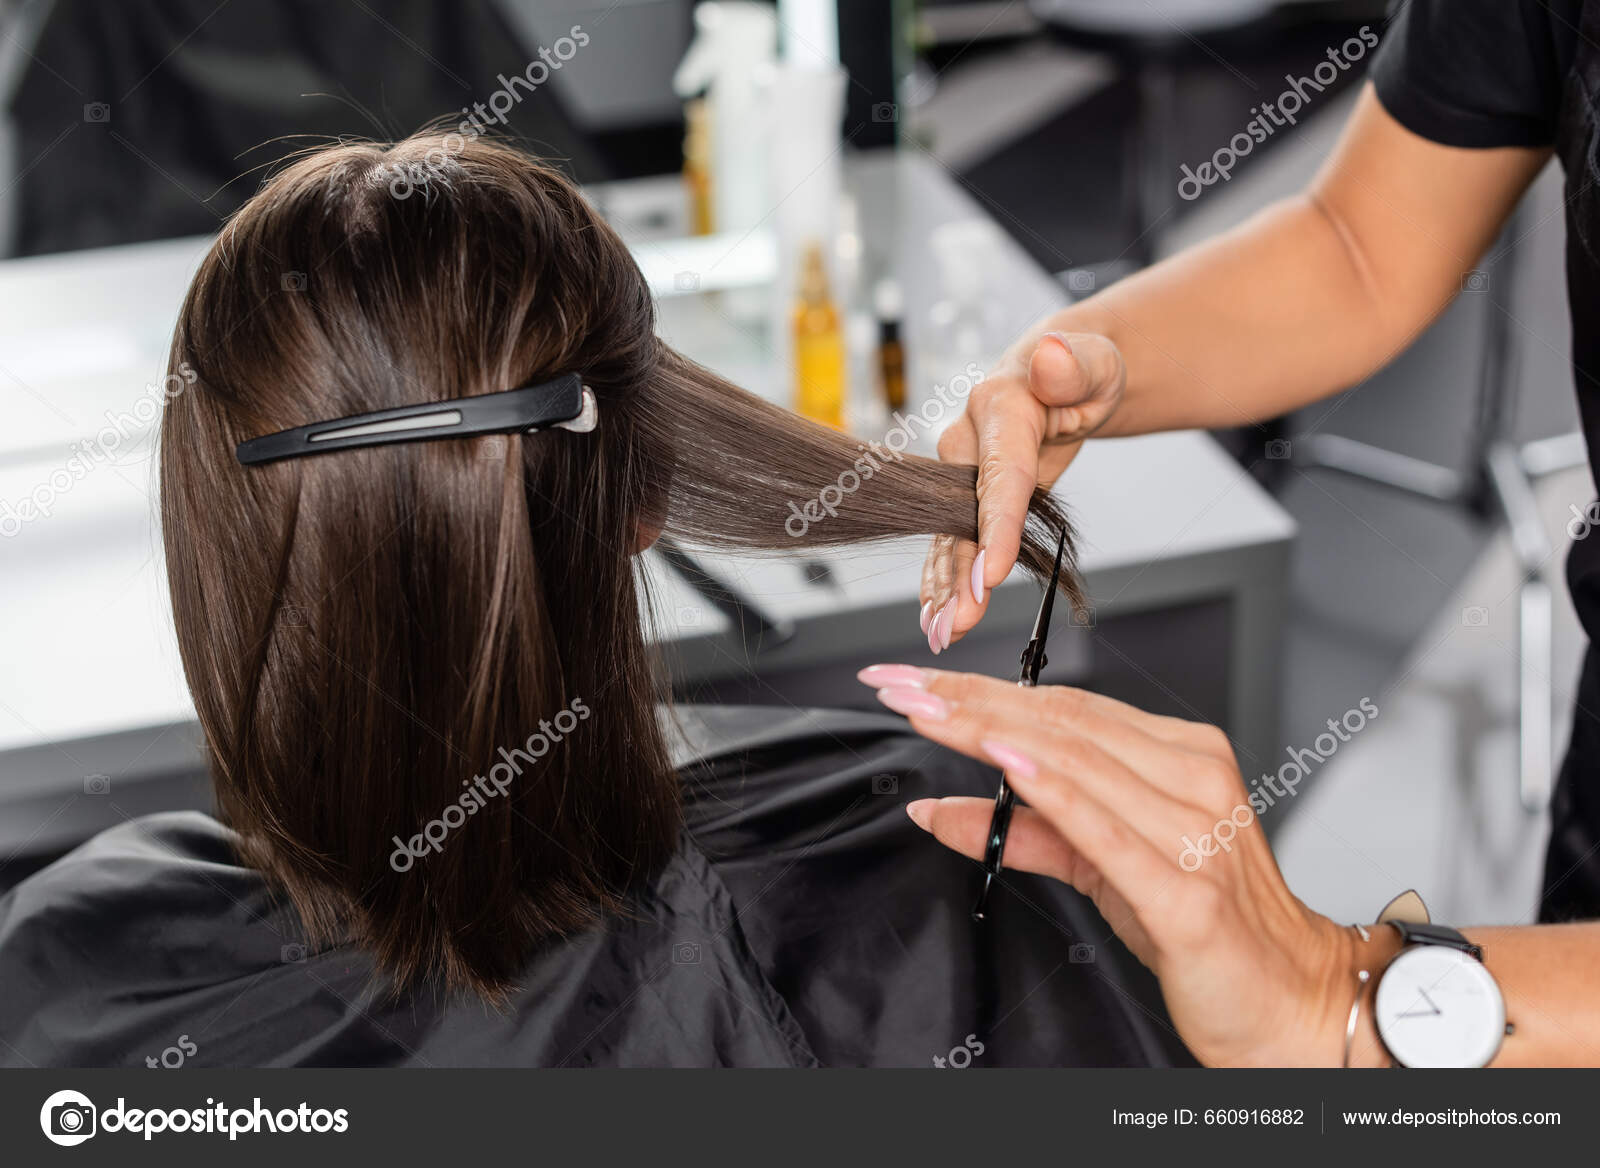 Vista traseira do corte de cabelo do barbeiro feminino, fazendo o